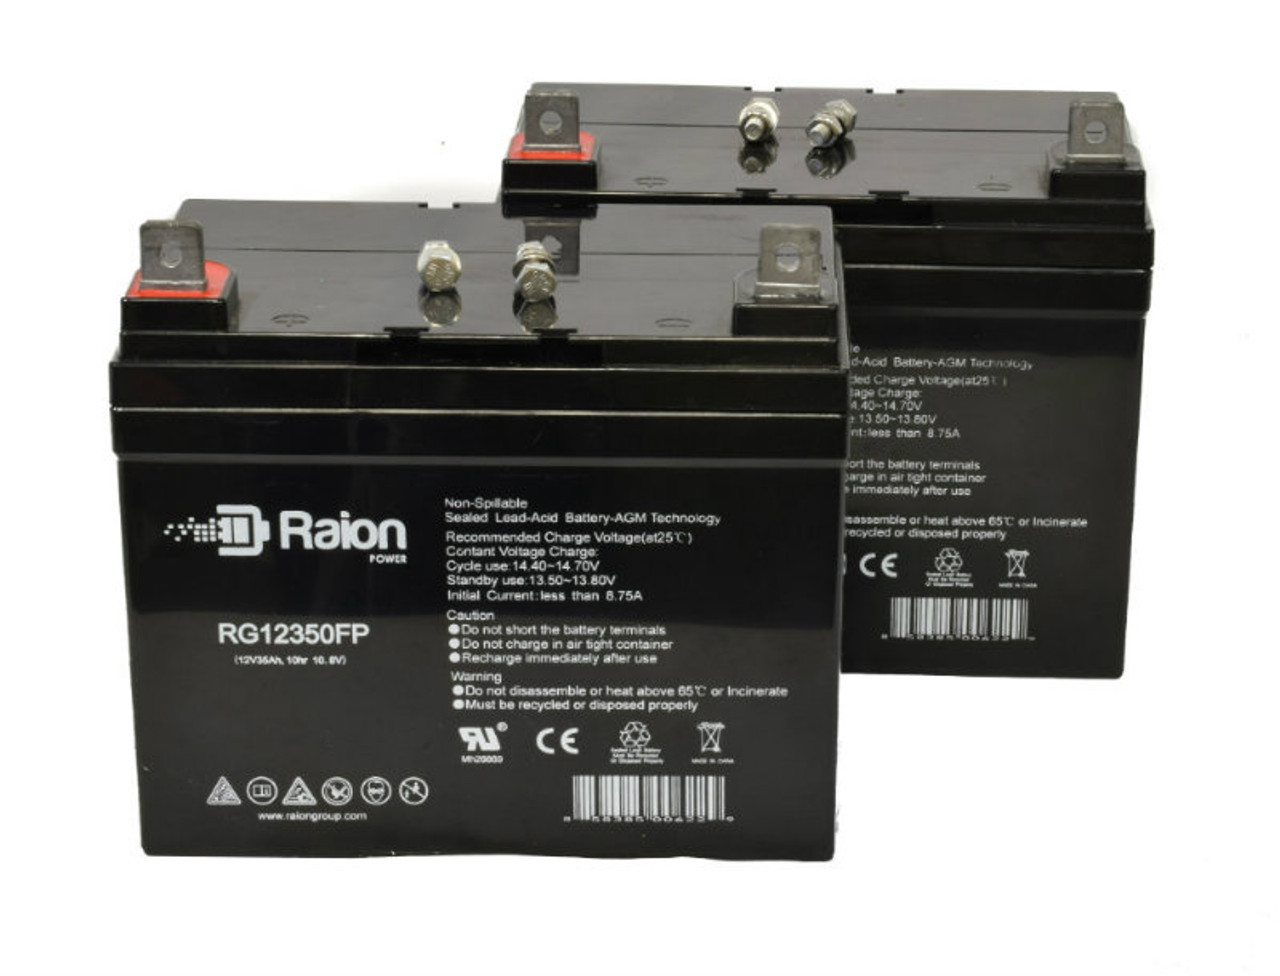 Raion Power Replacement 12V 35Ah Lawn Mower Battery for John Deere 180 - 2 Pack